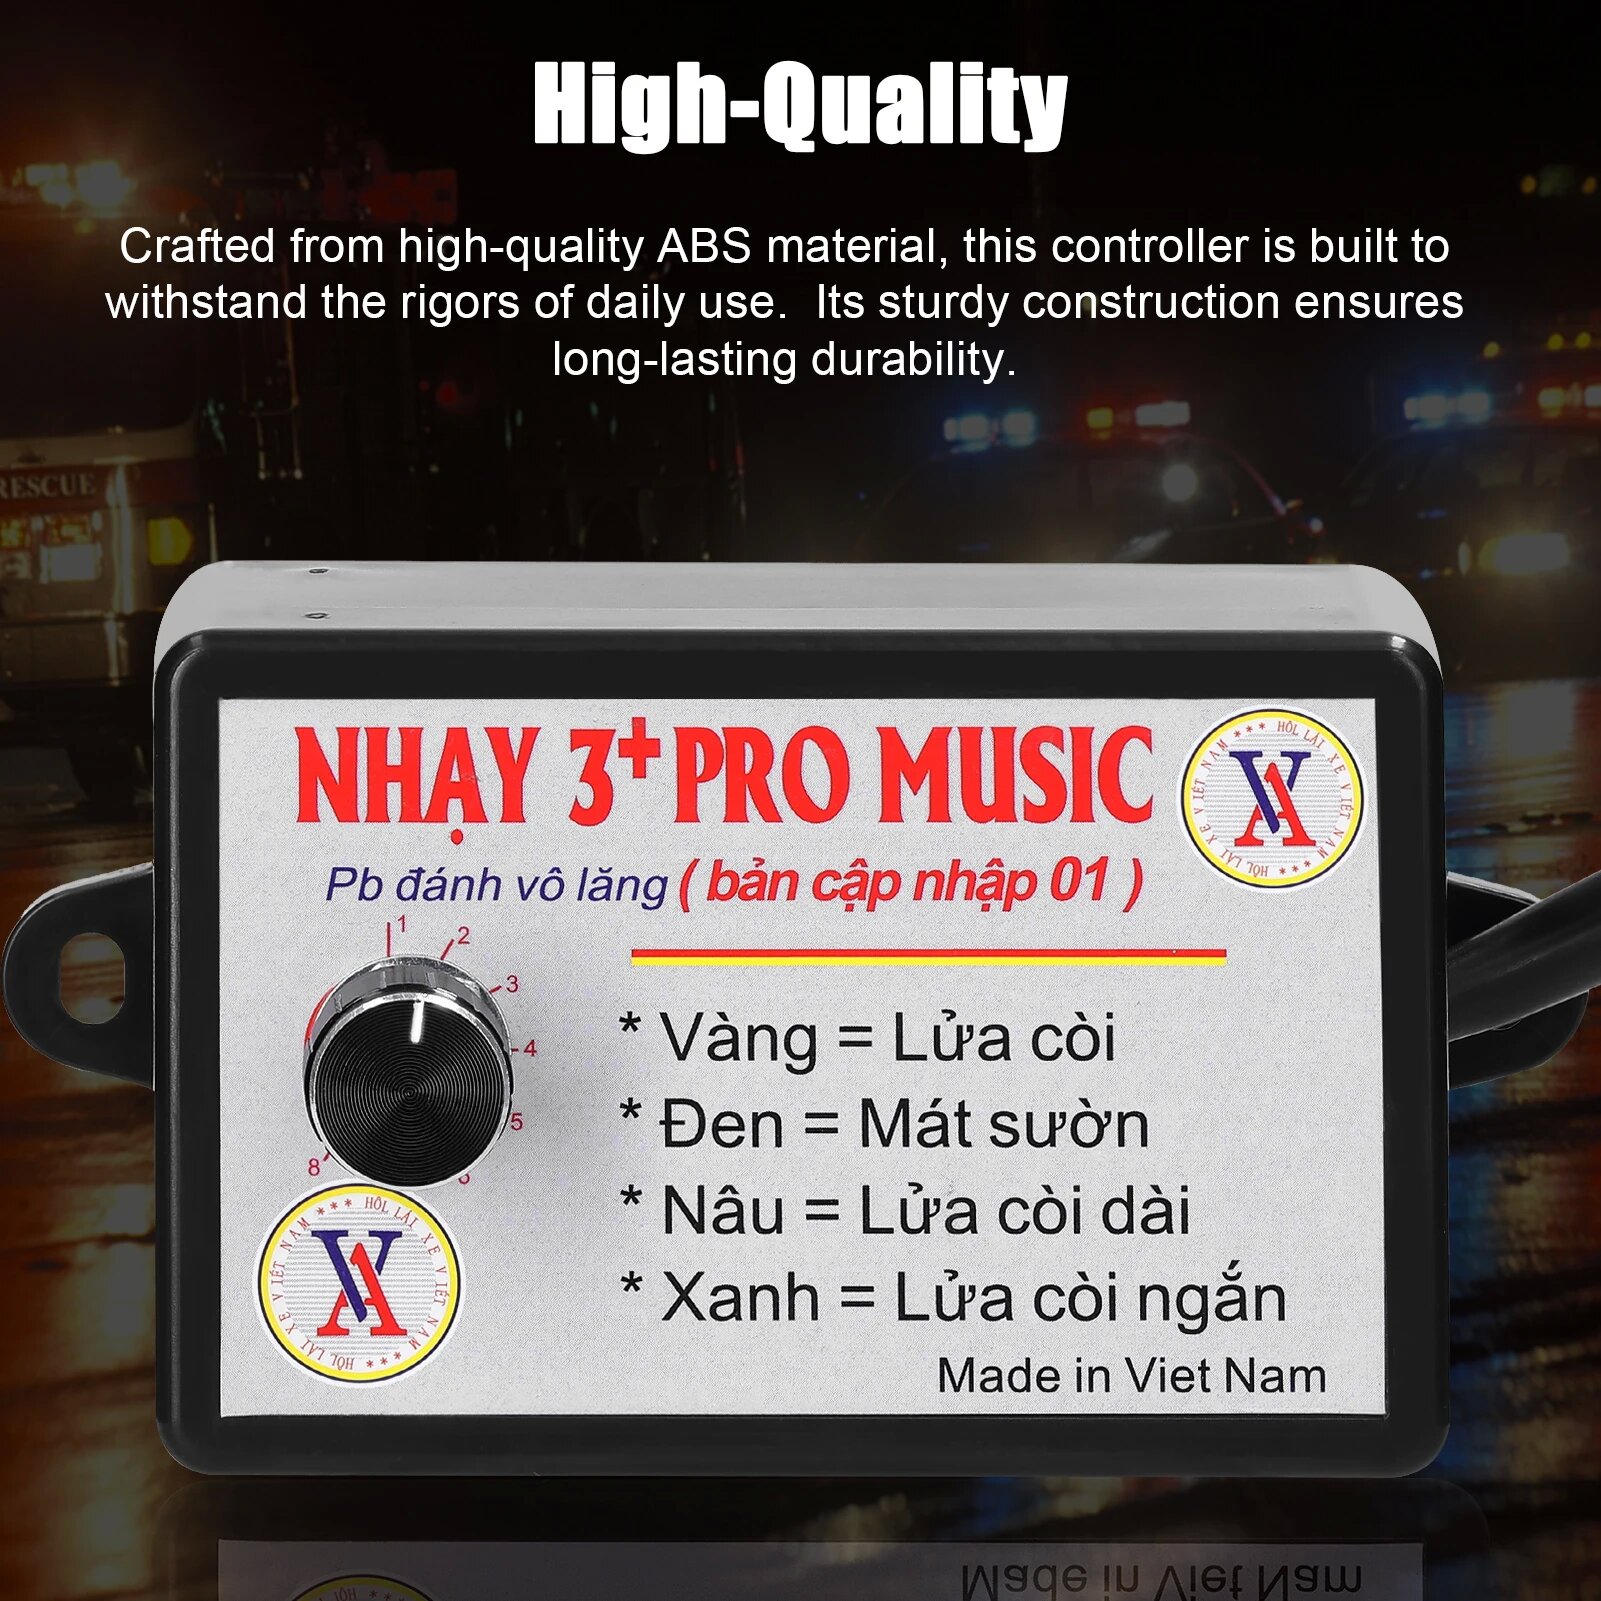 Nhay 3 Pro music box 12v to 24v Rapid relay tunebox rapid music box nhay 3pro music for car trucker